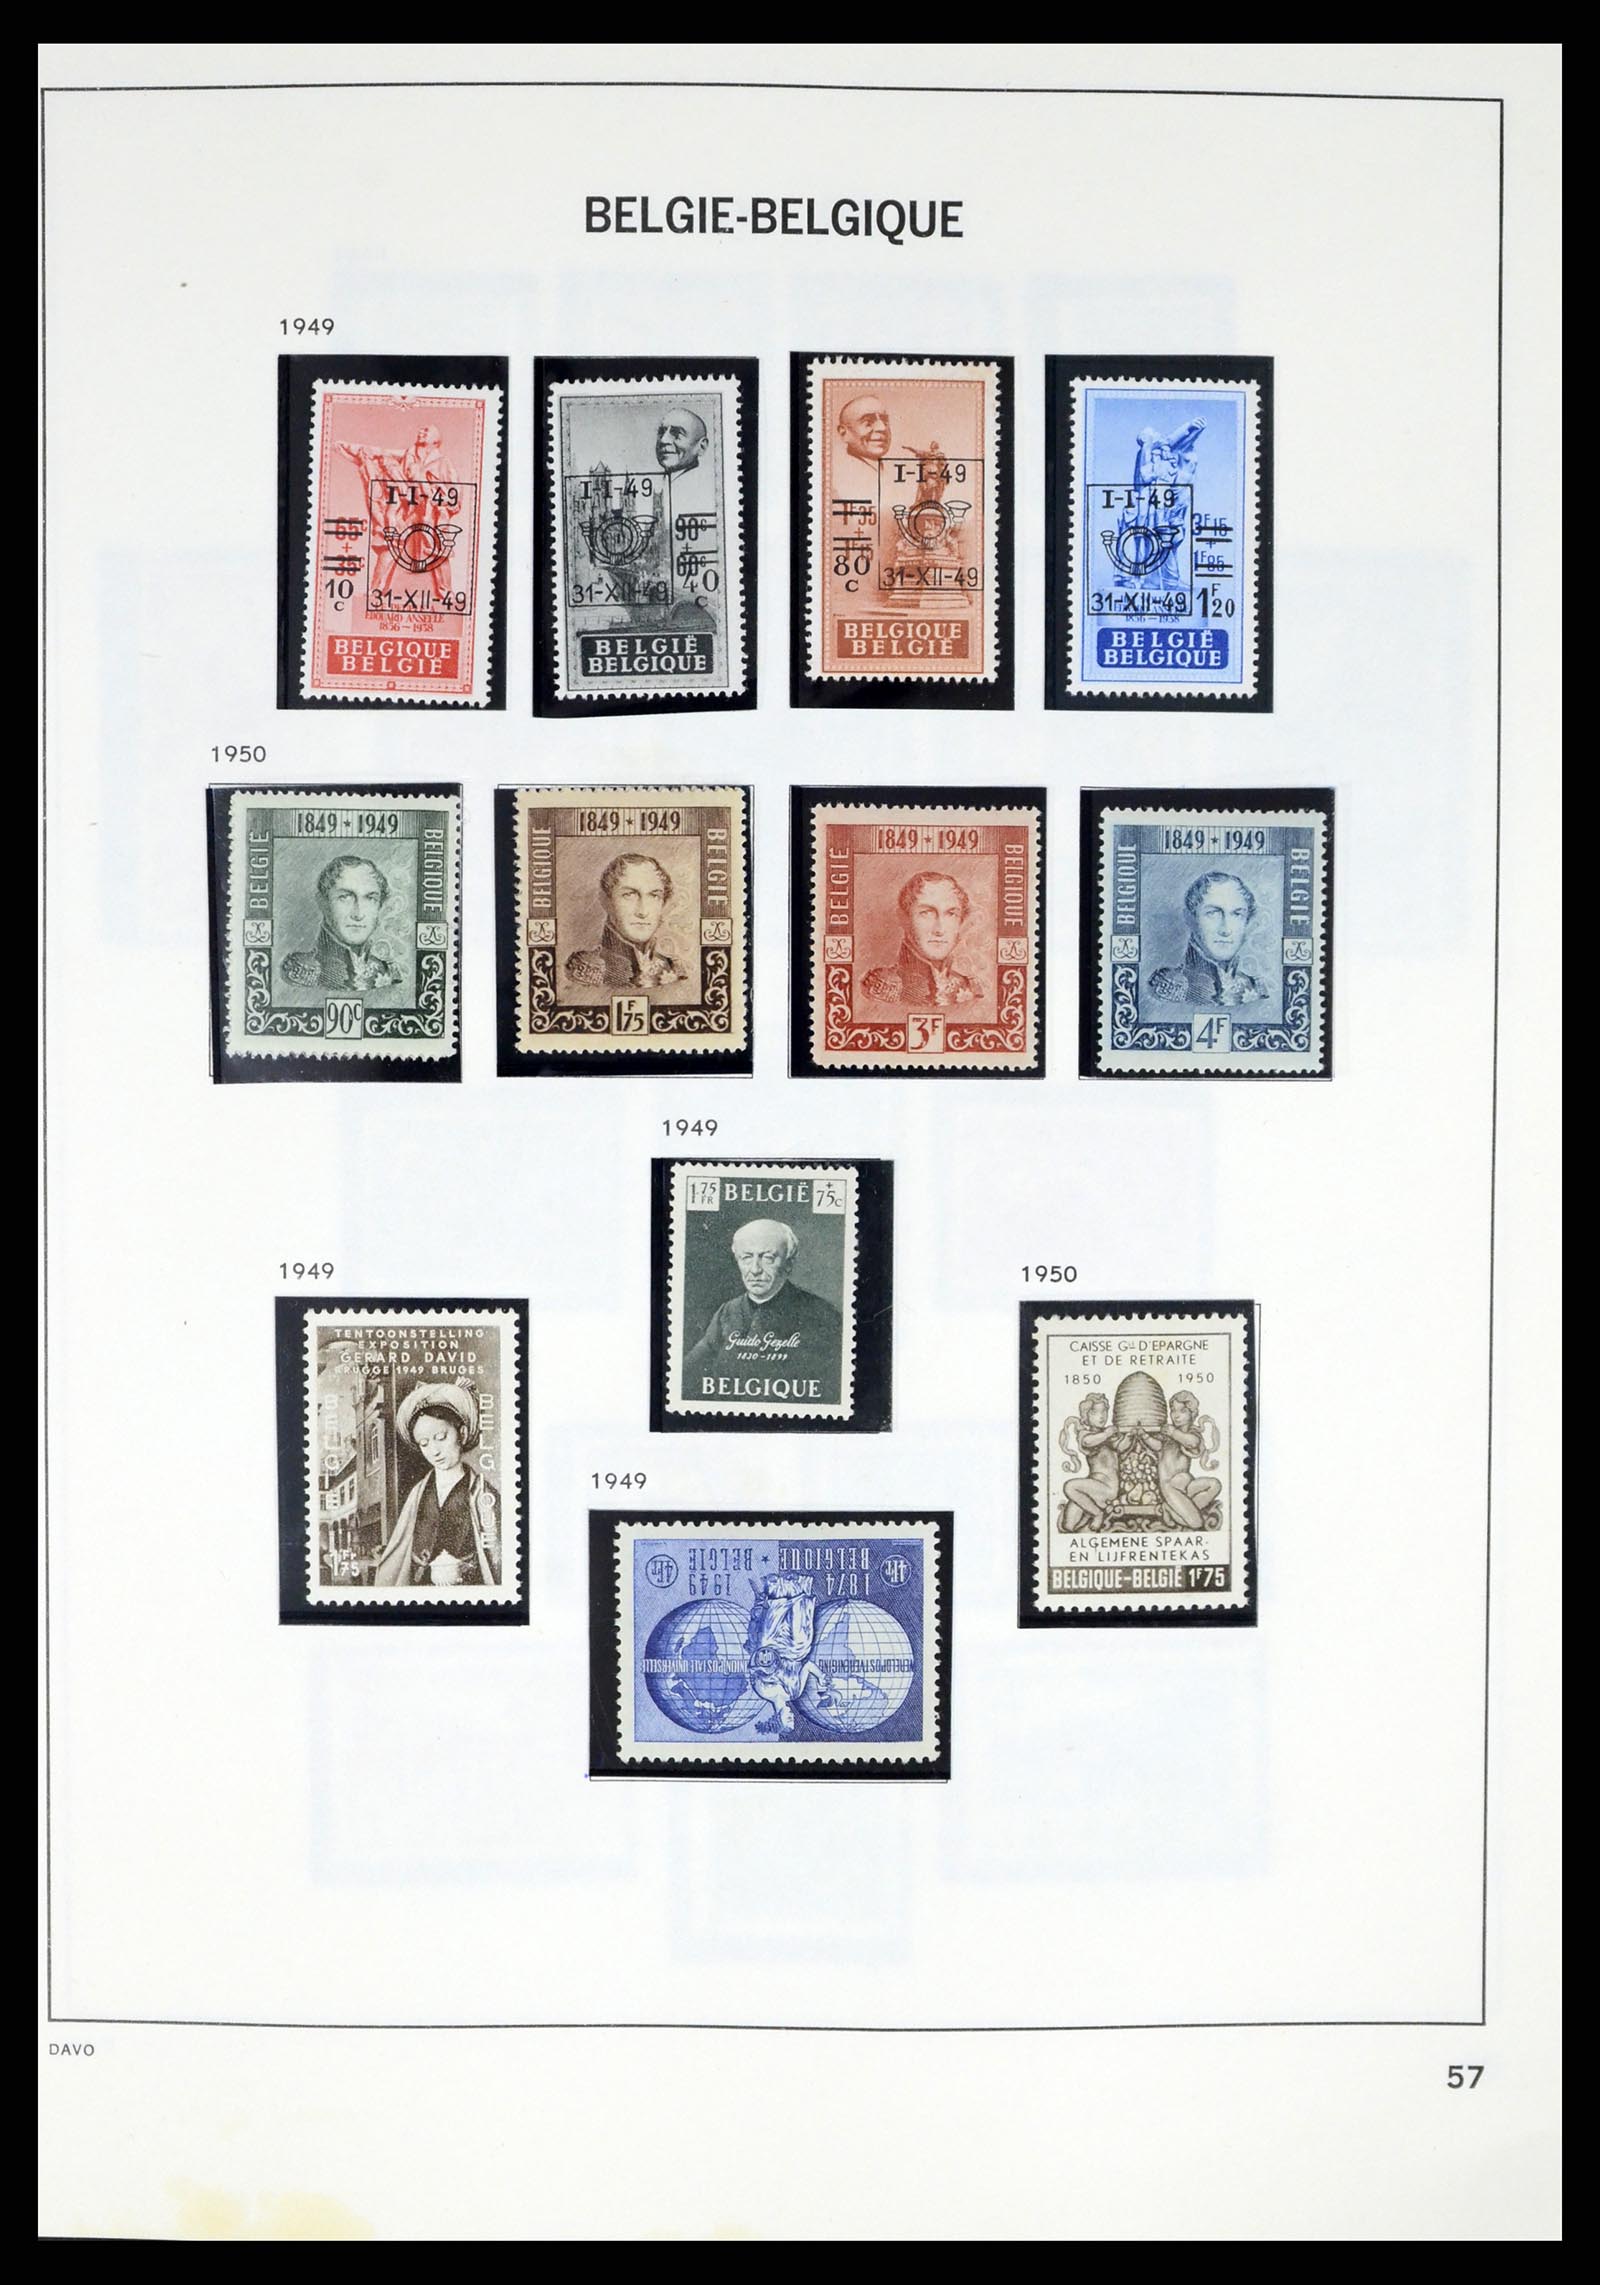 37367 055 - Stamp collection 37367 Belgium 1849-2003.